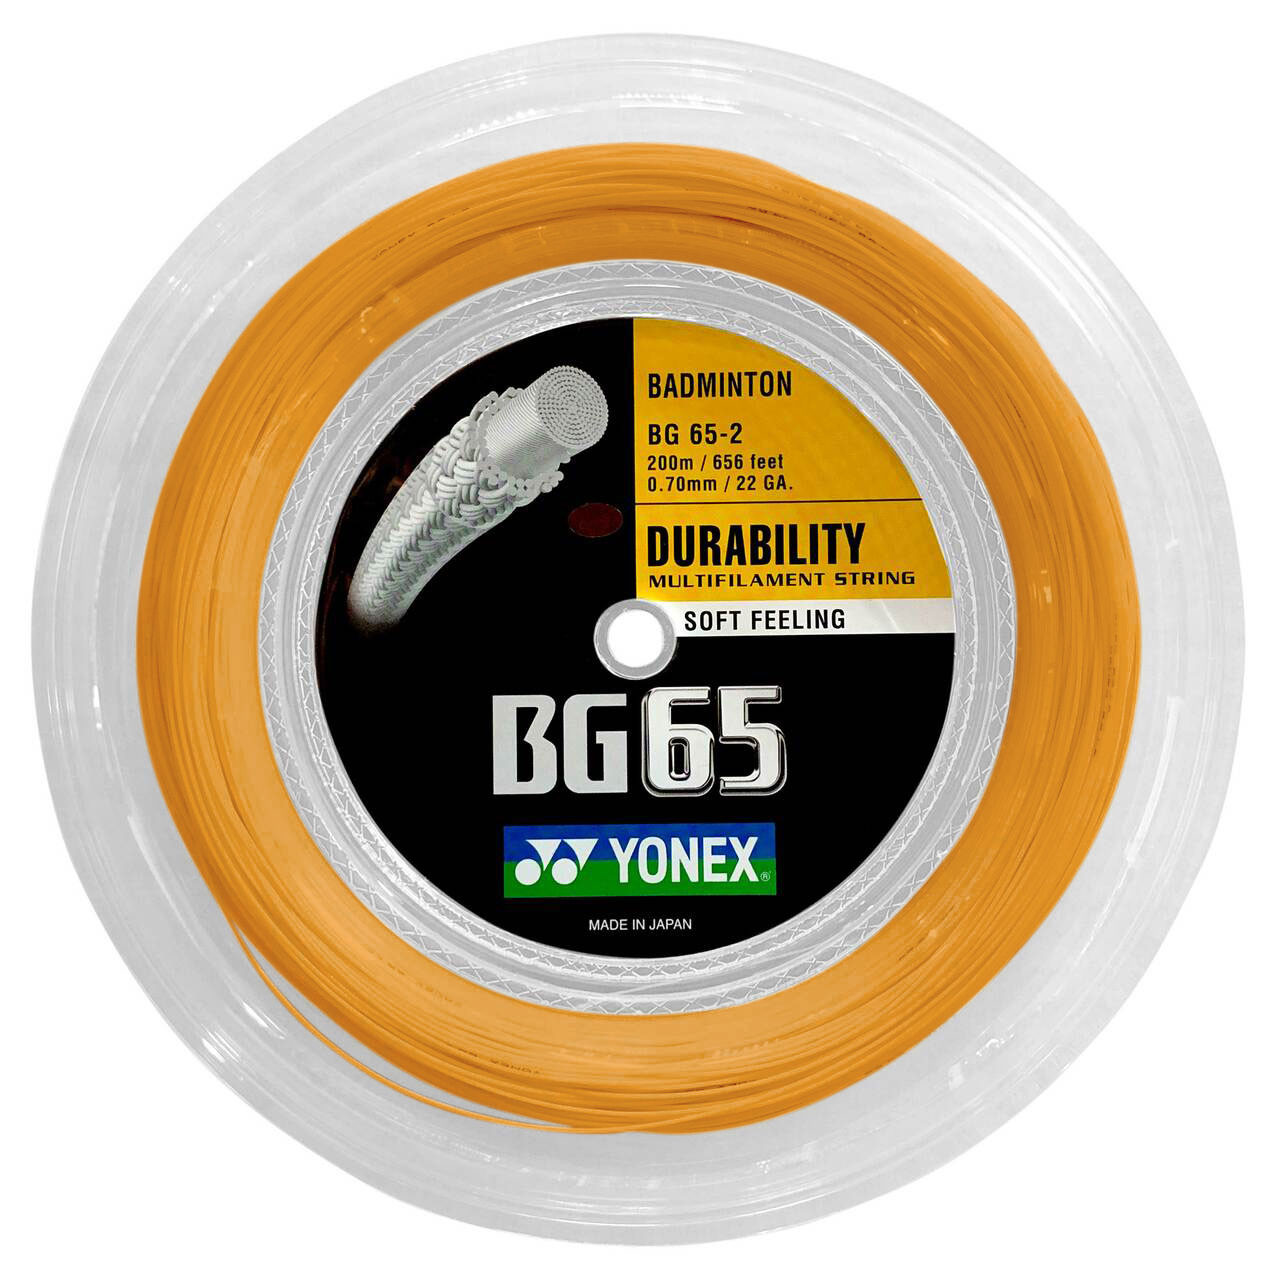 Yonex BG65 0.70mm Badminton 200M Reel - W & D Strings